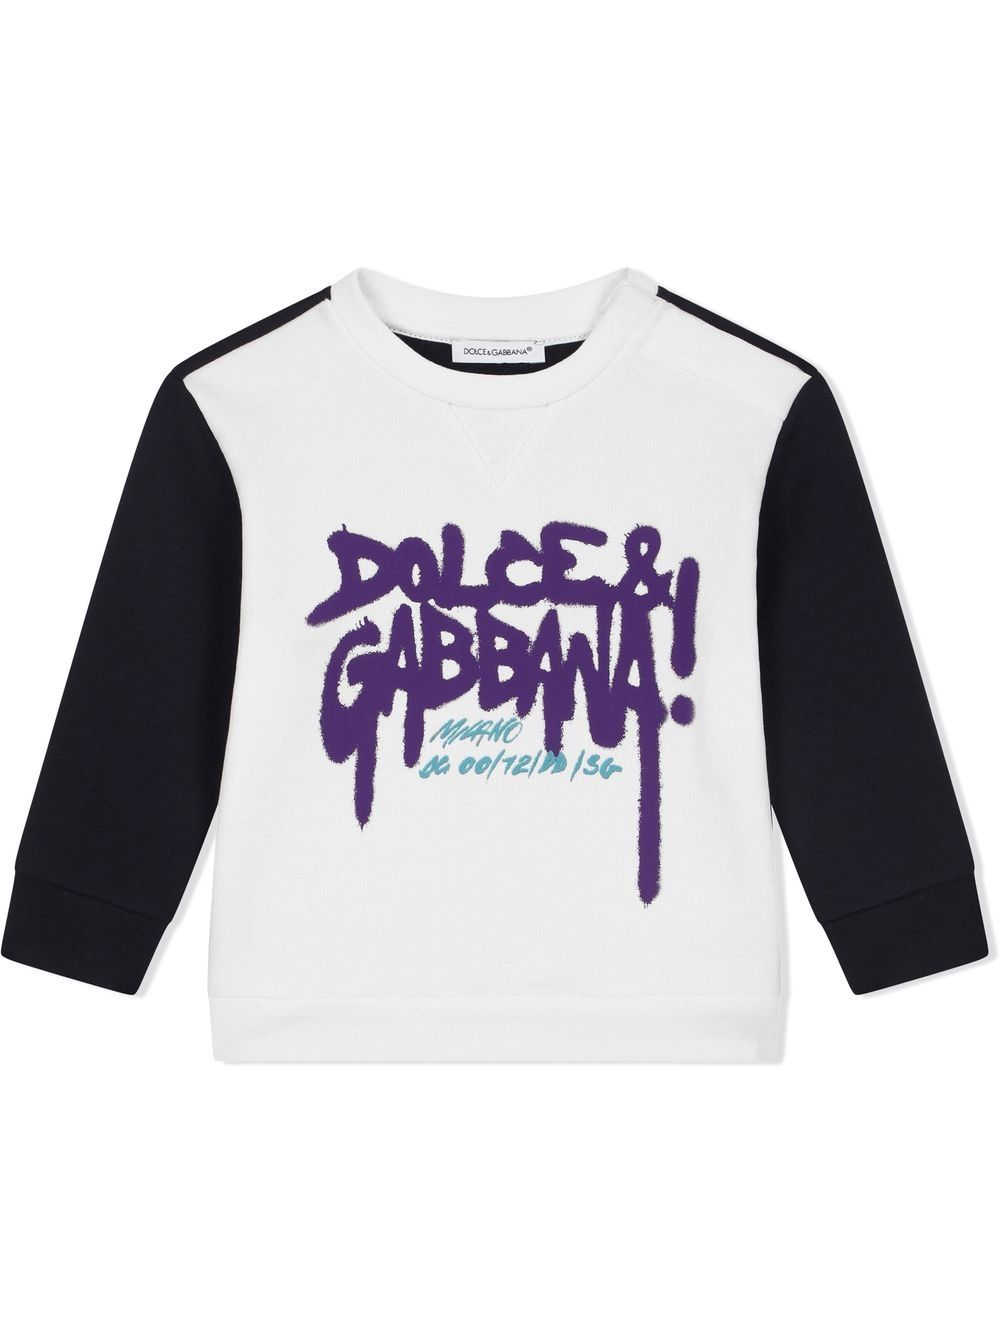 Image 1 of Dolce & Gabbana Kids logo-print long-sleeved T-shirt